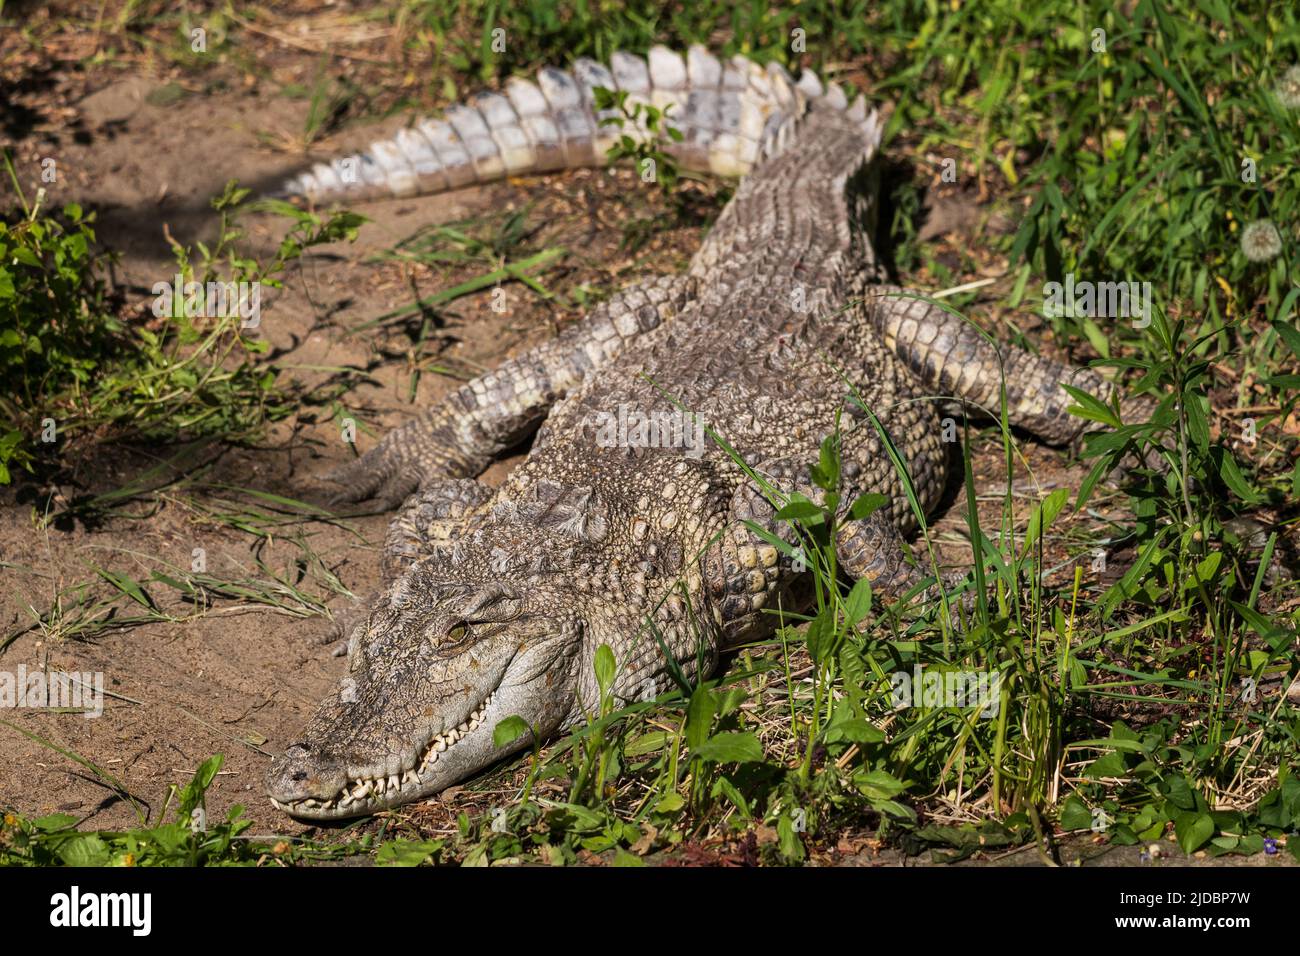 The Siamese crocodile (Crocodylus siamensis), freshwater crocodile native to Southeast Asia, critically endangered species in the family Crocodylidae. Stock Photo